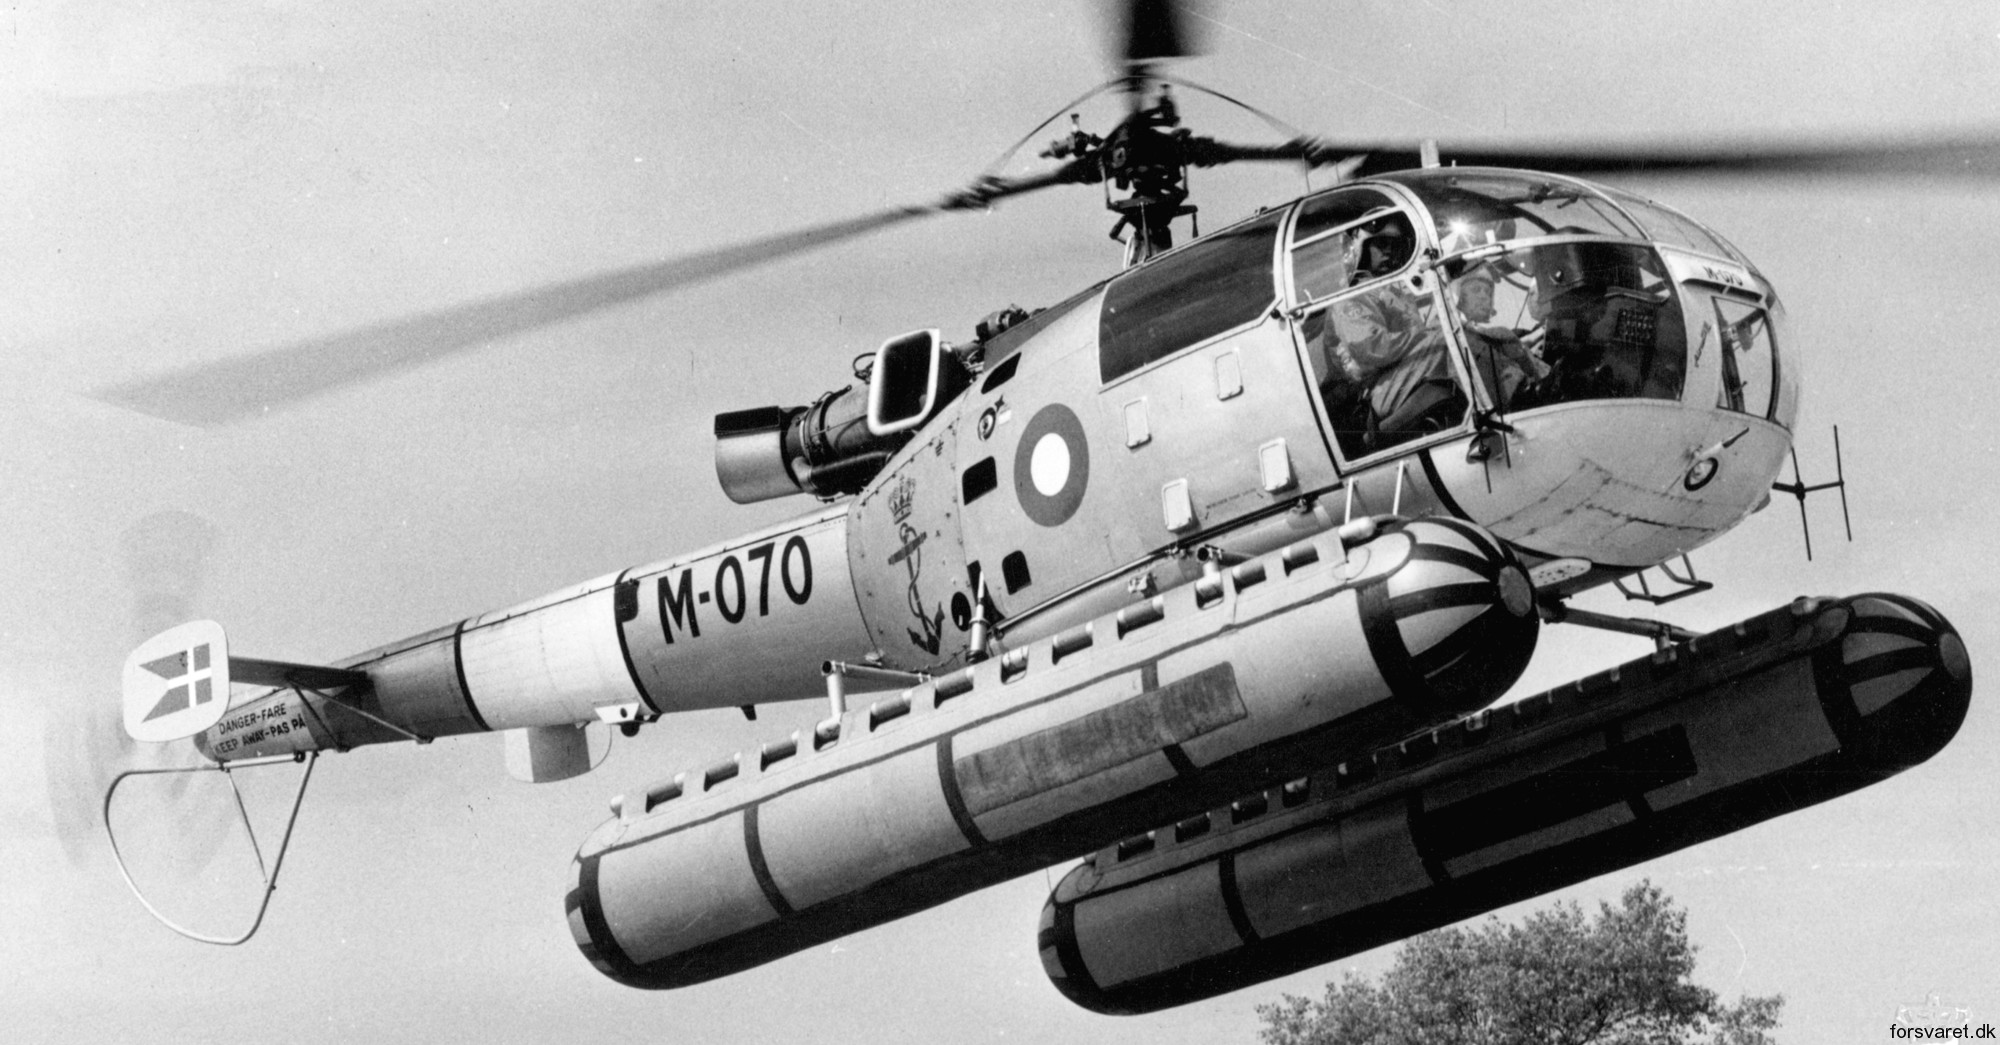 sa 316b alouette iii helicopter royal danish navy søværnet kongelige danske marine sud aviation m-070 02